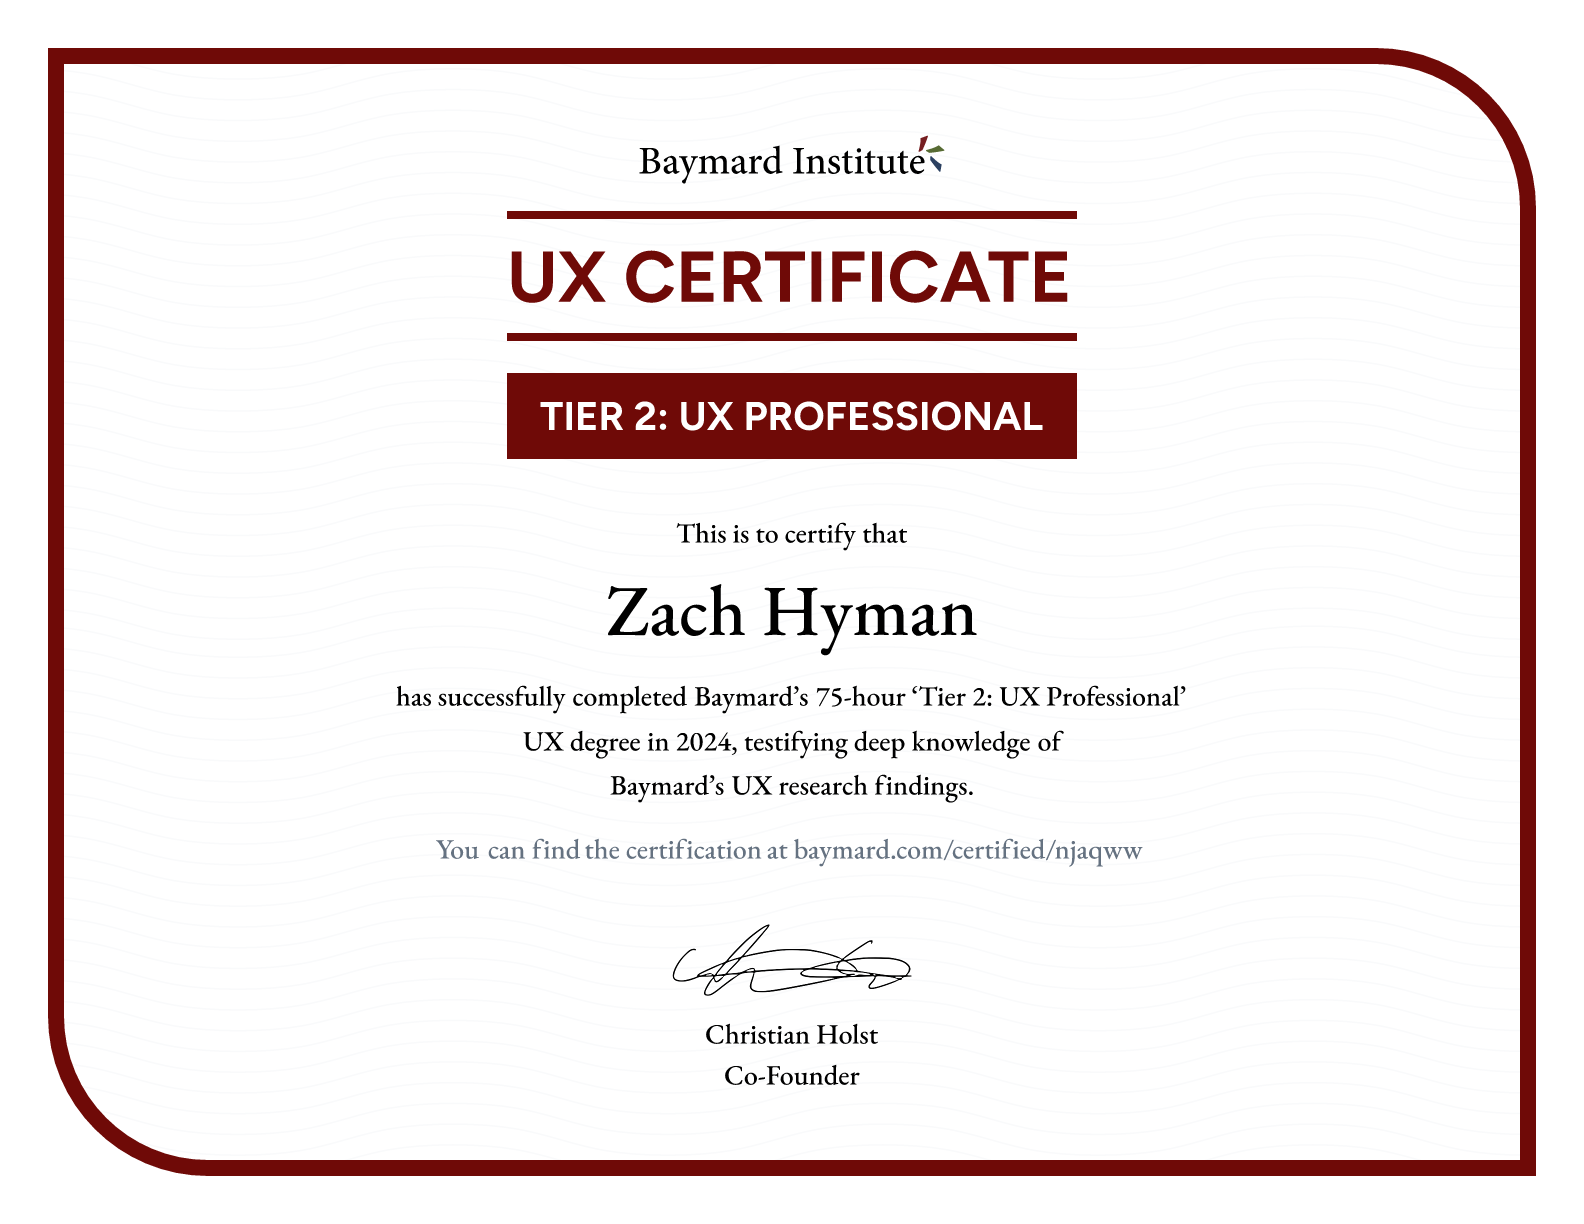 Zach Hyman’s certificate